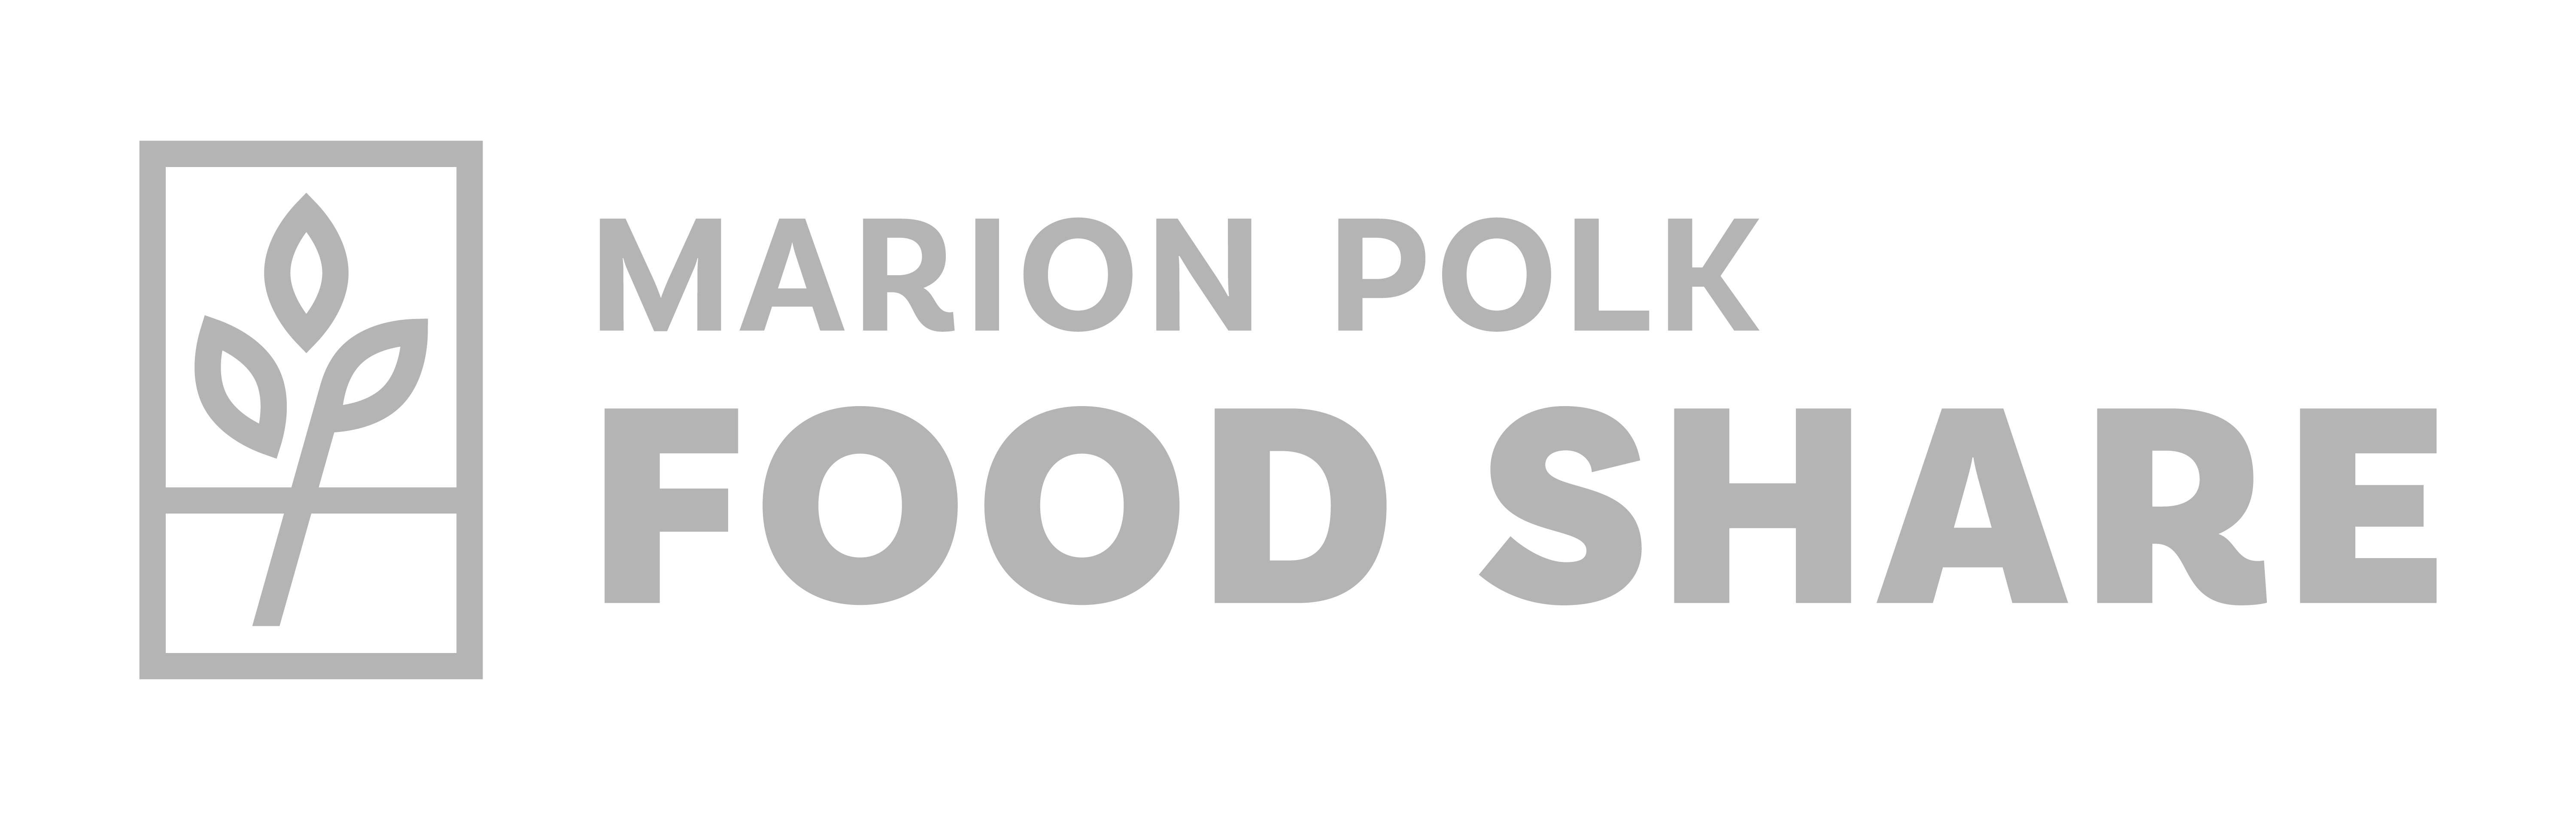 Food-Share-logo-primary-green-grey